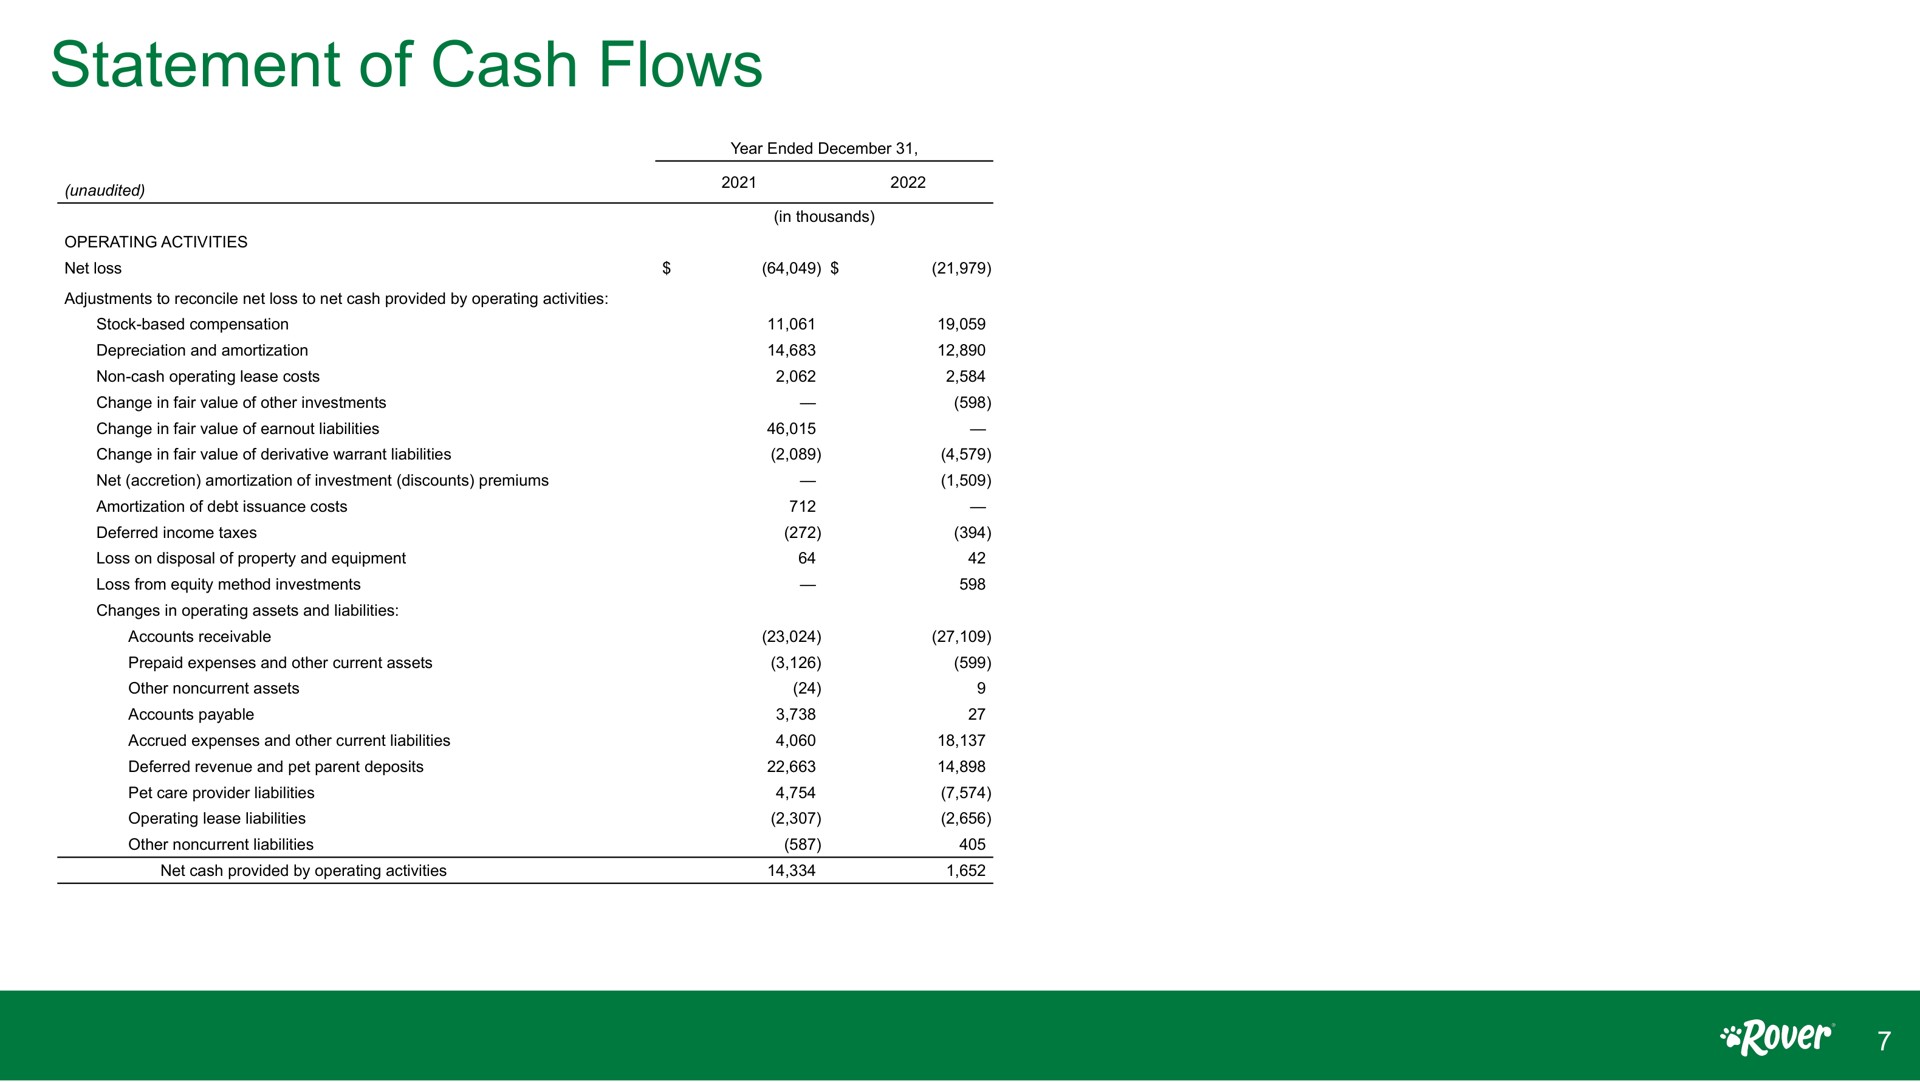 statement of cash flows | Rover